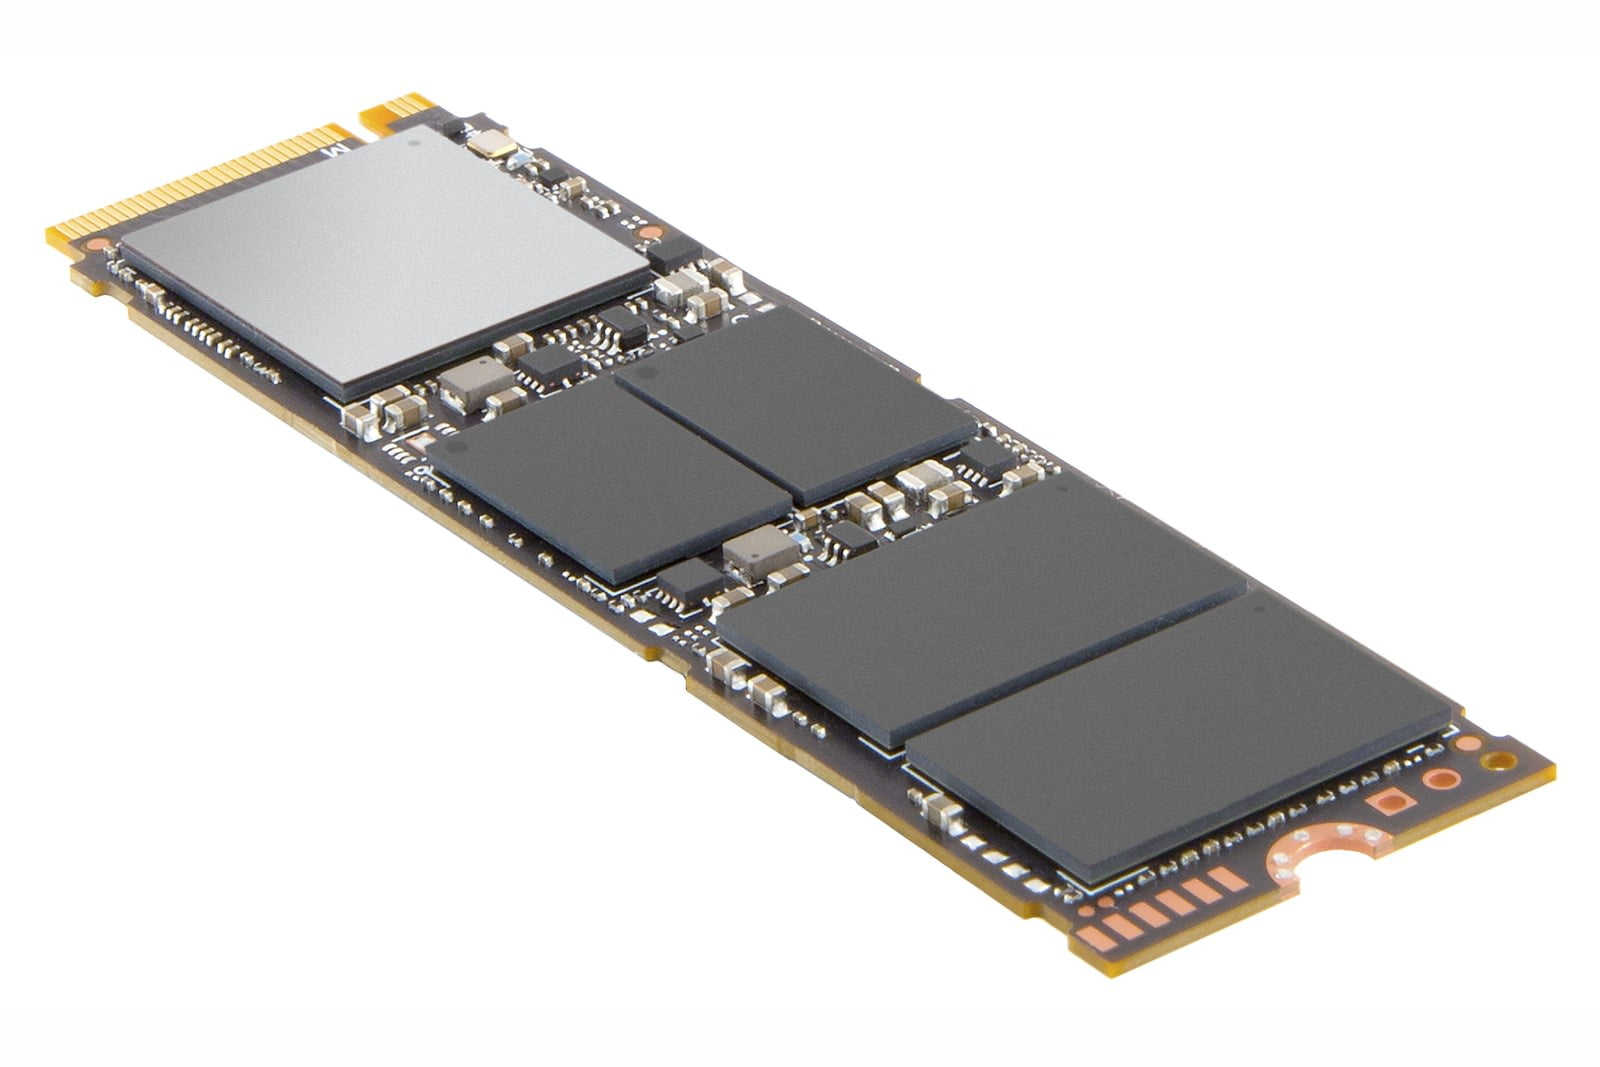 Stor rense Læring Intel Pro 760p 128GB M.2 80mm PCIE Solid State Drive (SSD) -  SSDPEKKW128G801 - Walmart.com